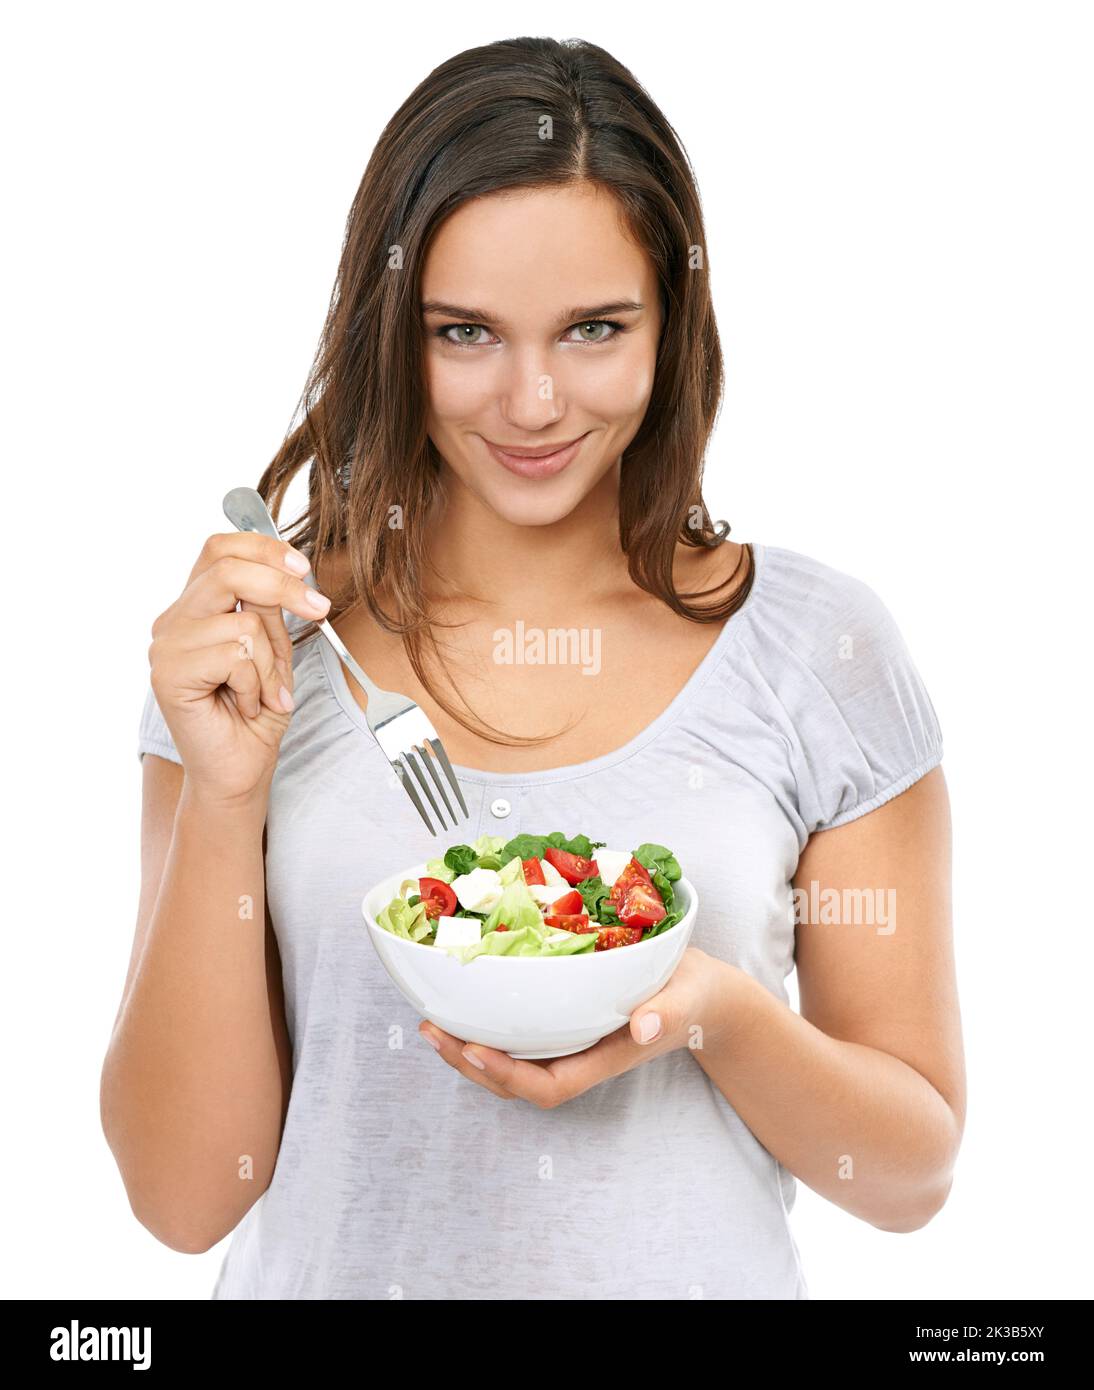 Enjoying a healthy snack. Portrait of a young woman enjoying a fresh salad. Stock Photo